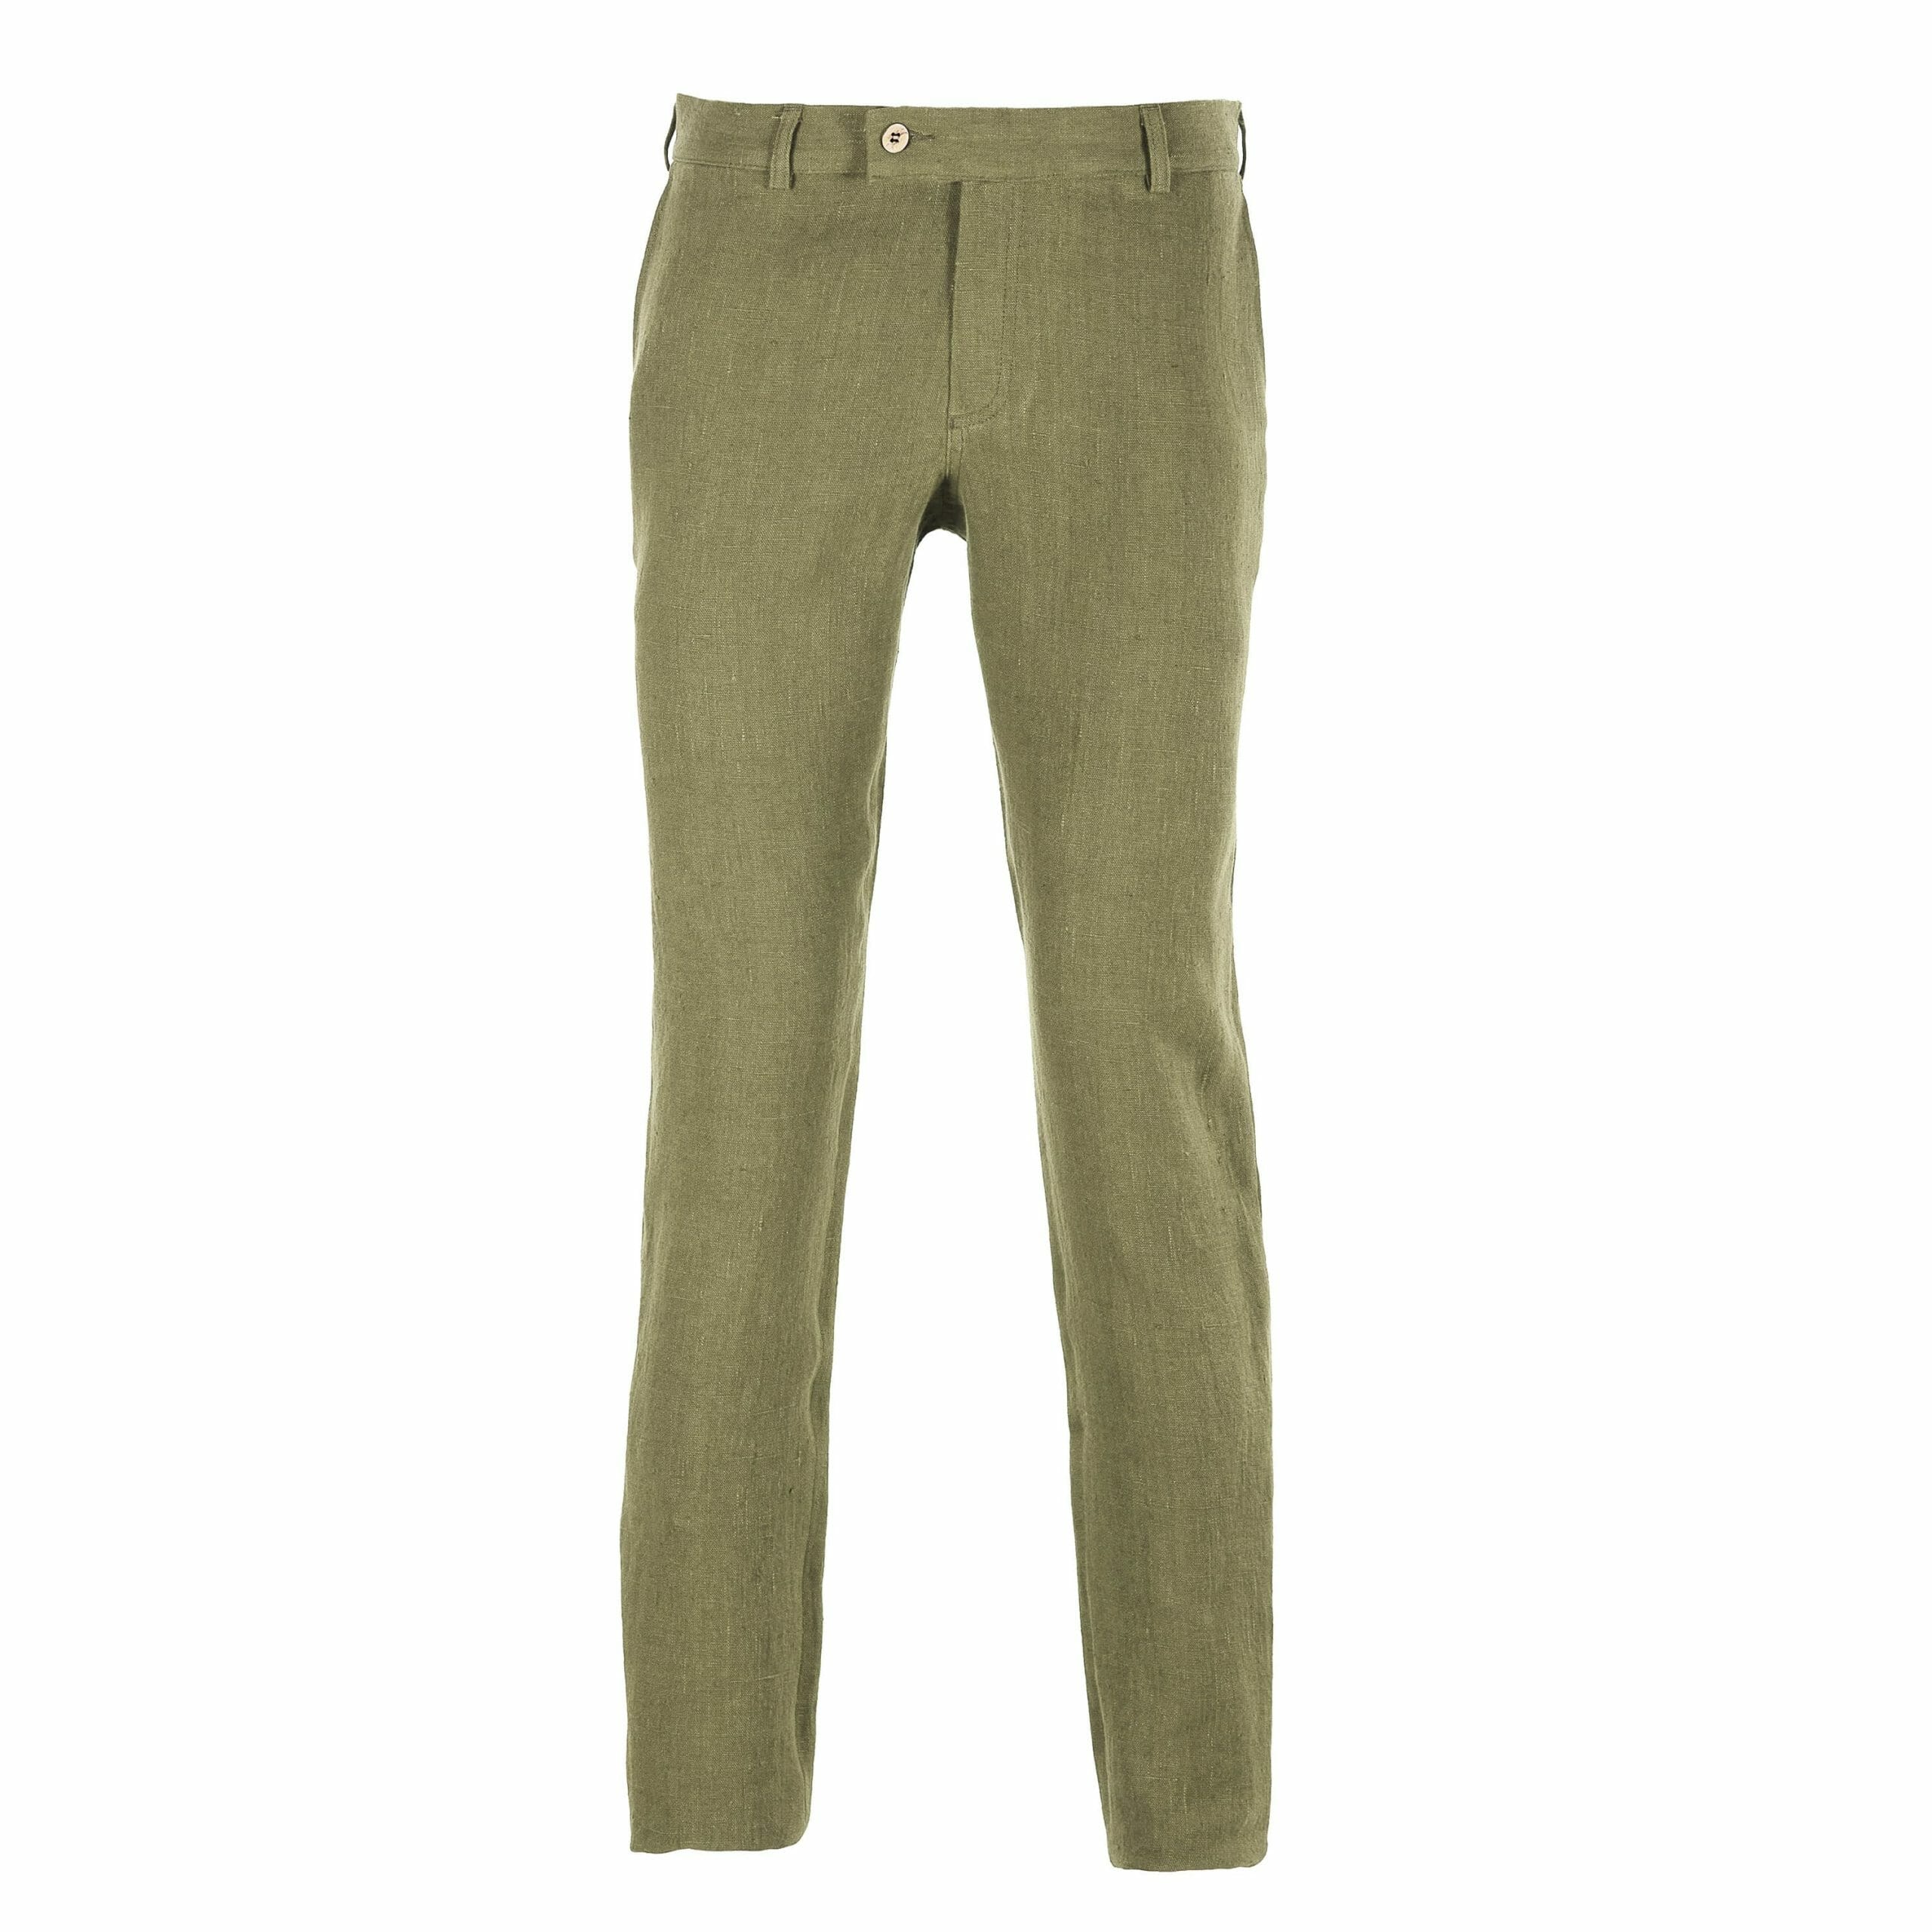 Mens Khaki Green Trousers | Best Hemp Clothing